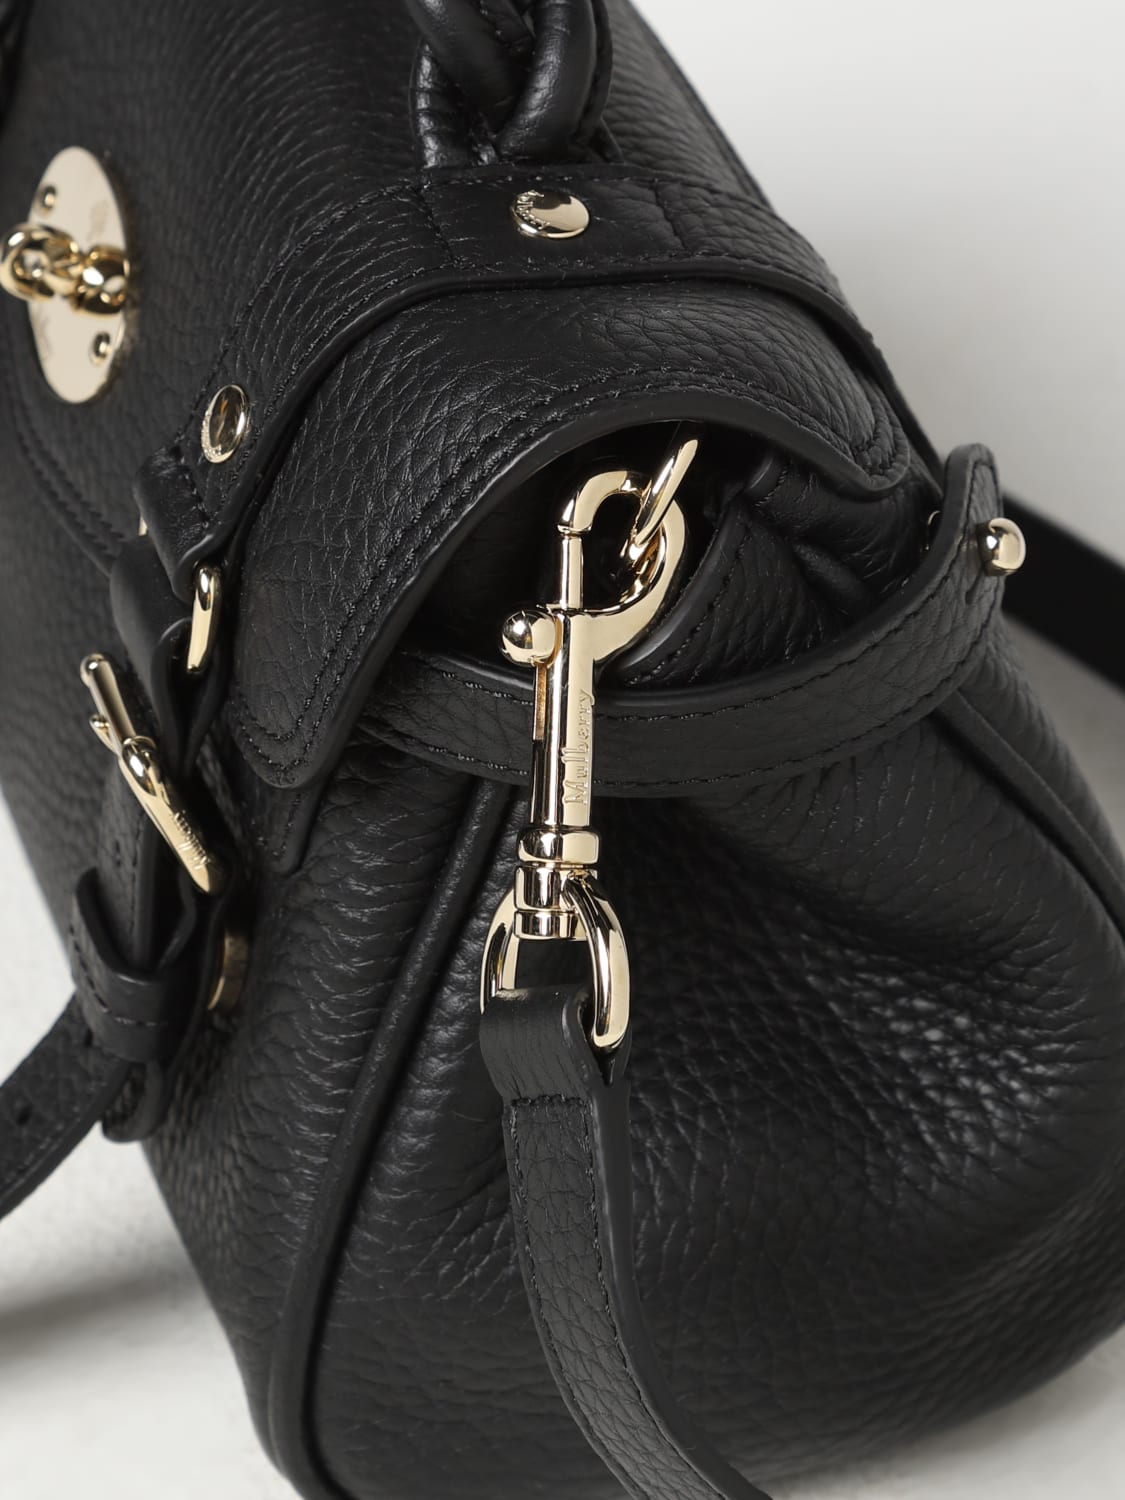 MULBERRY Women's Handbag Leather in Black